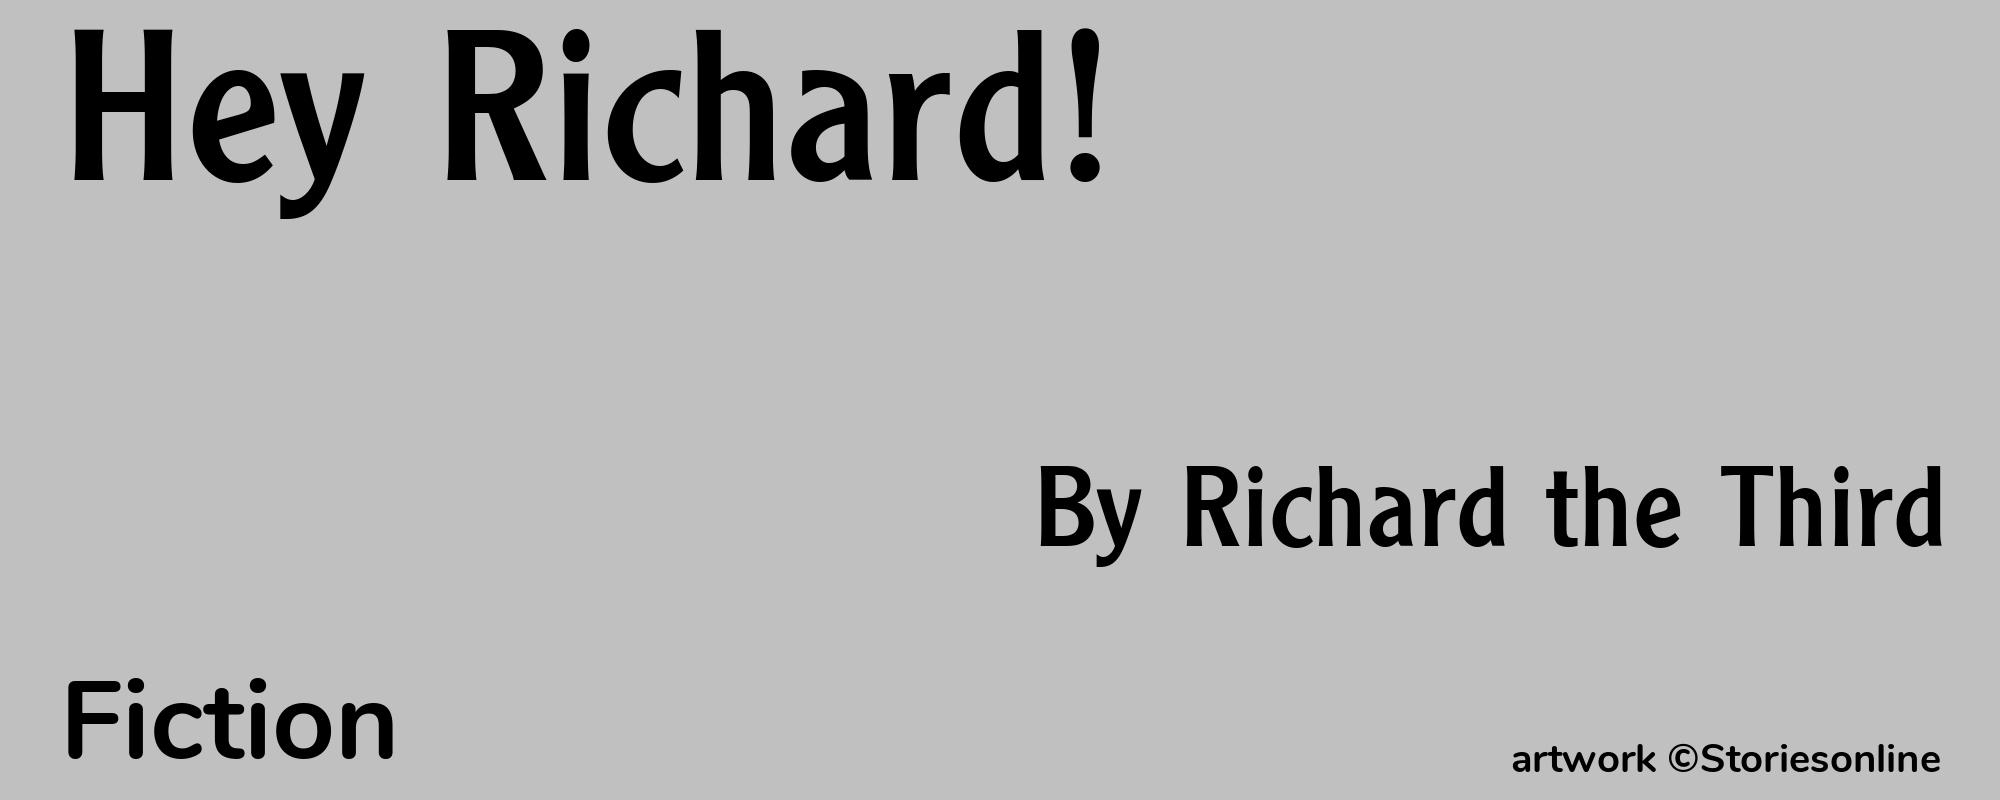 Hey Richard! - Cover